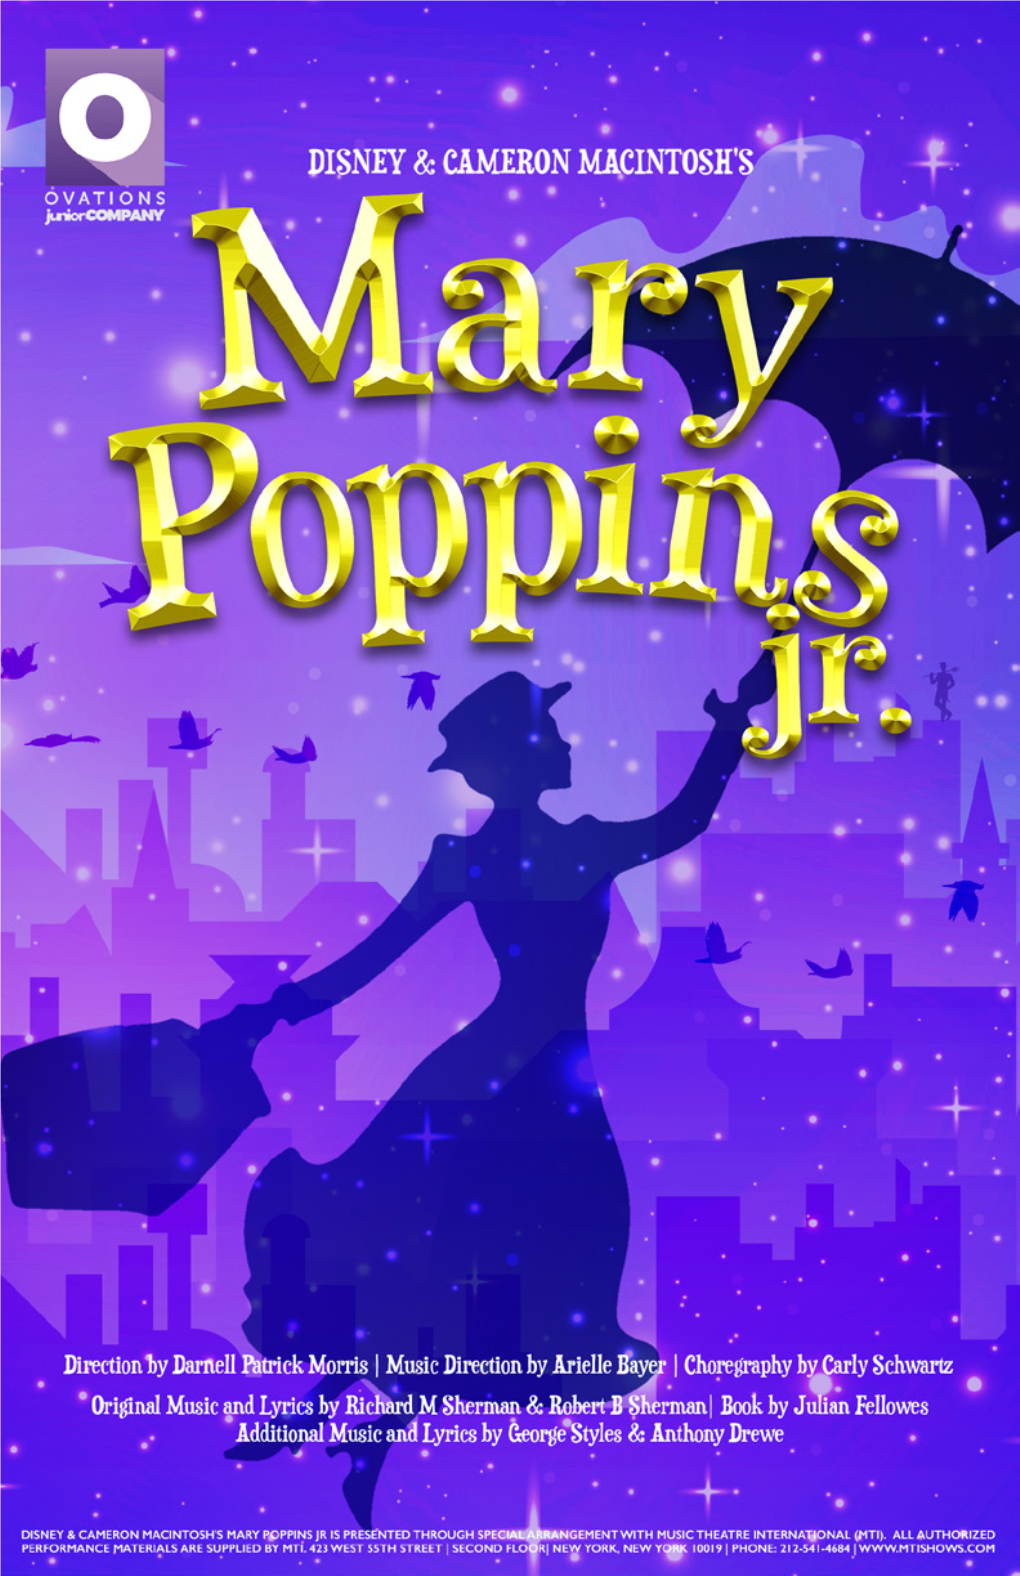 A PDF Copy of the Full MARY POPPINS JR Program